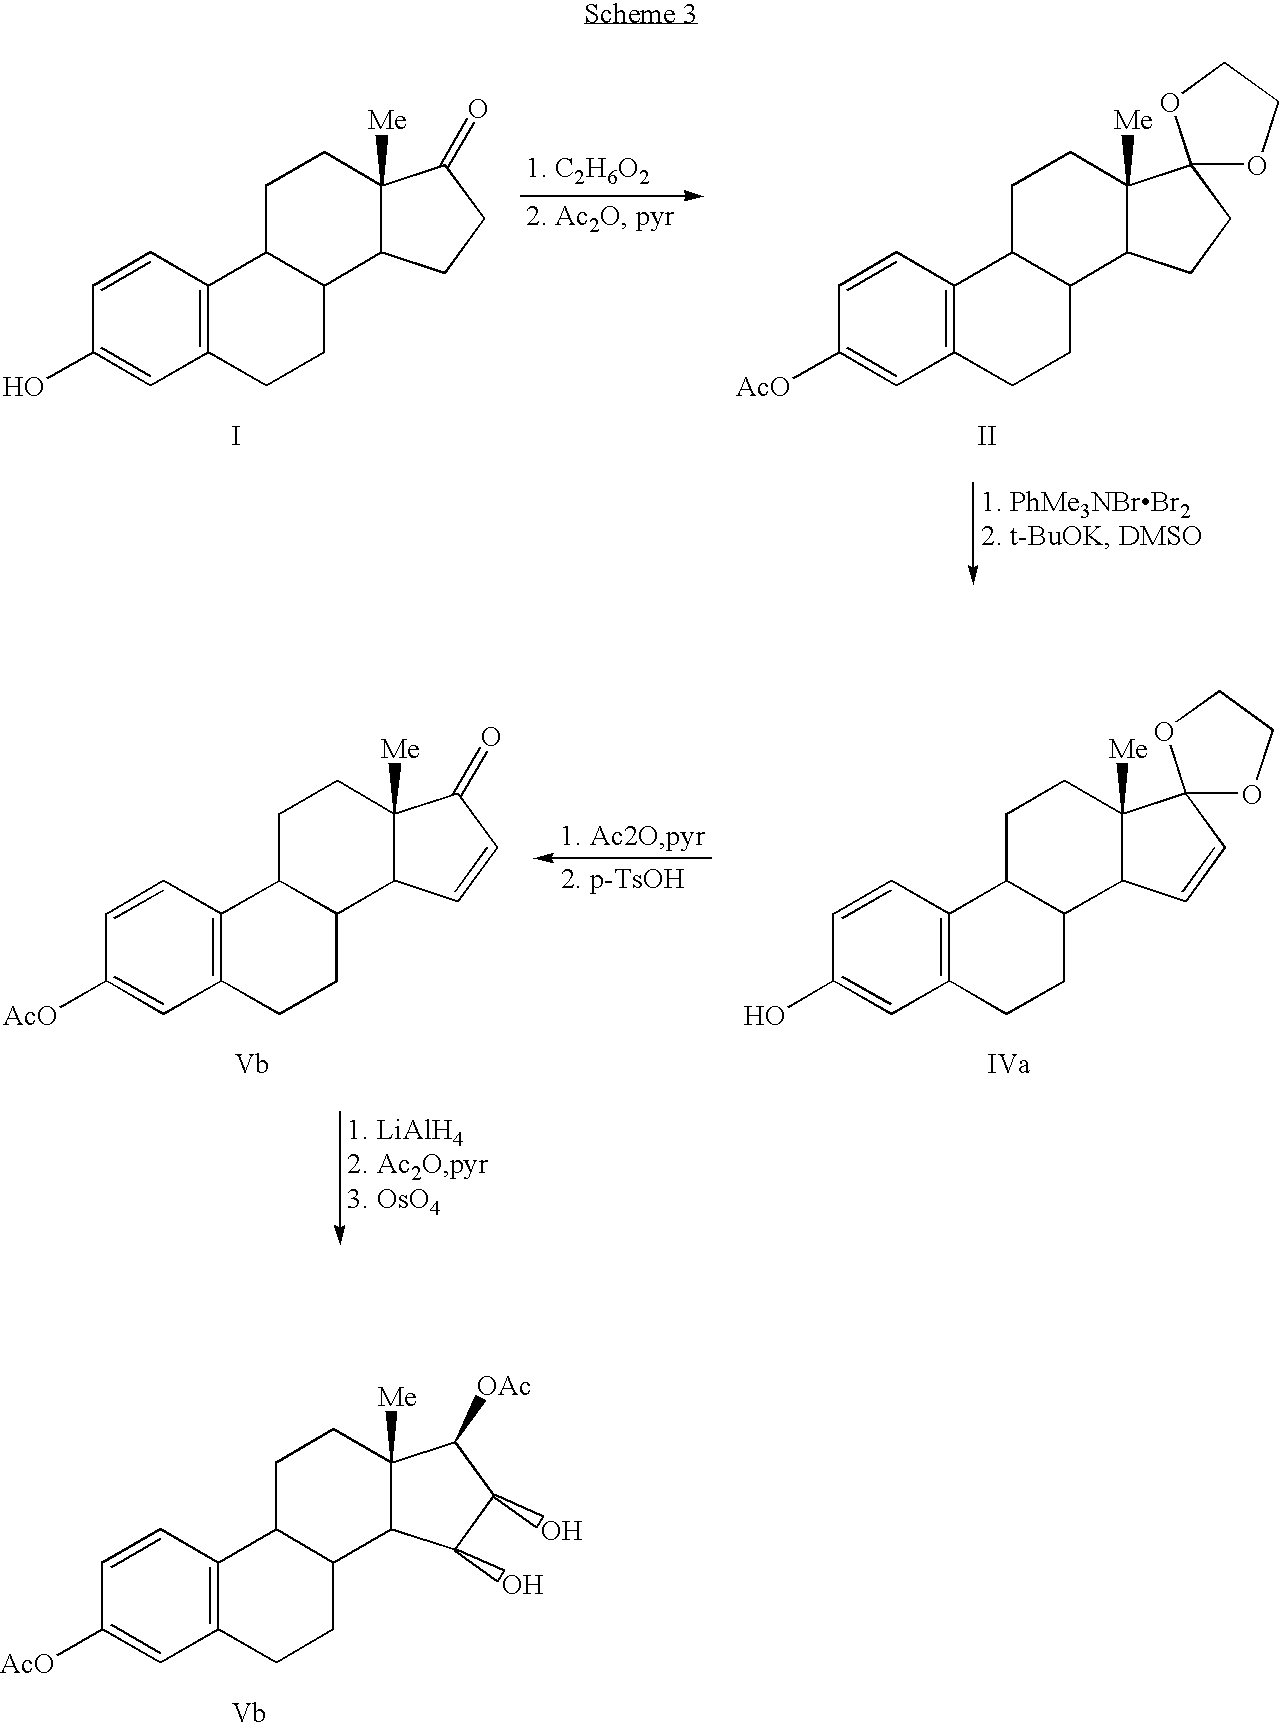 Synthesis of estetrol via estrone derived steroids